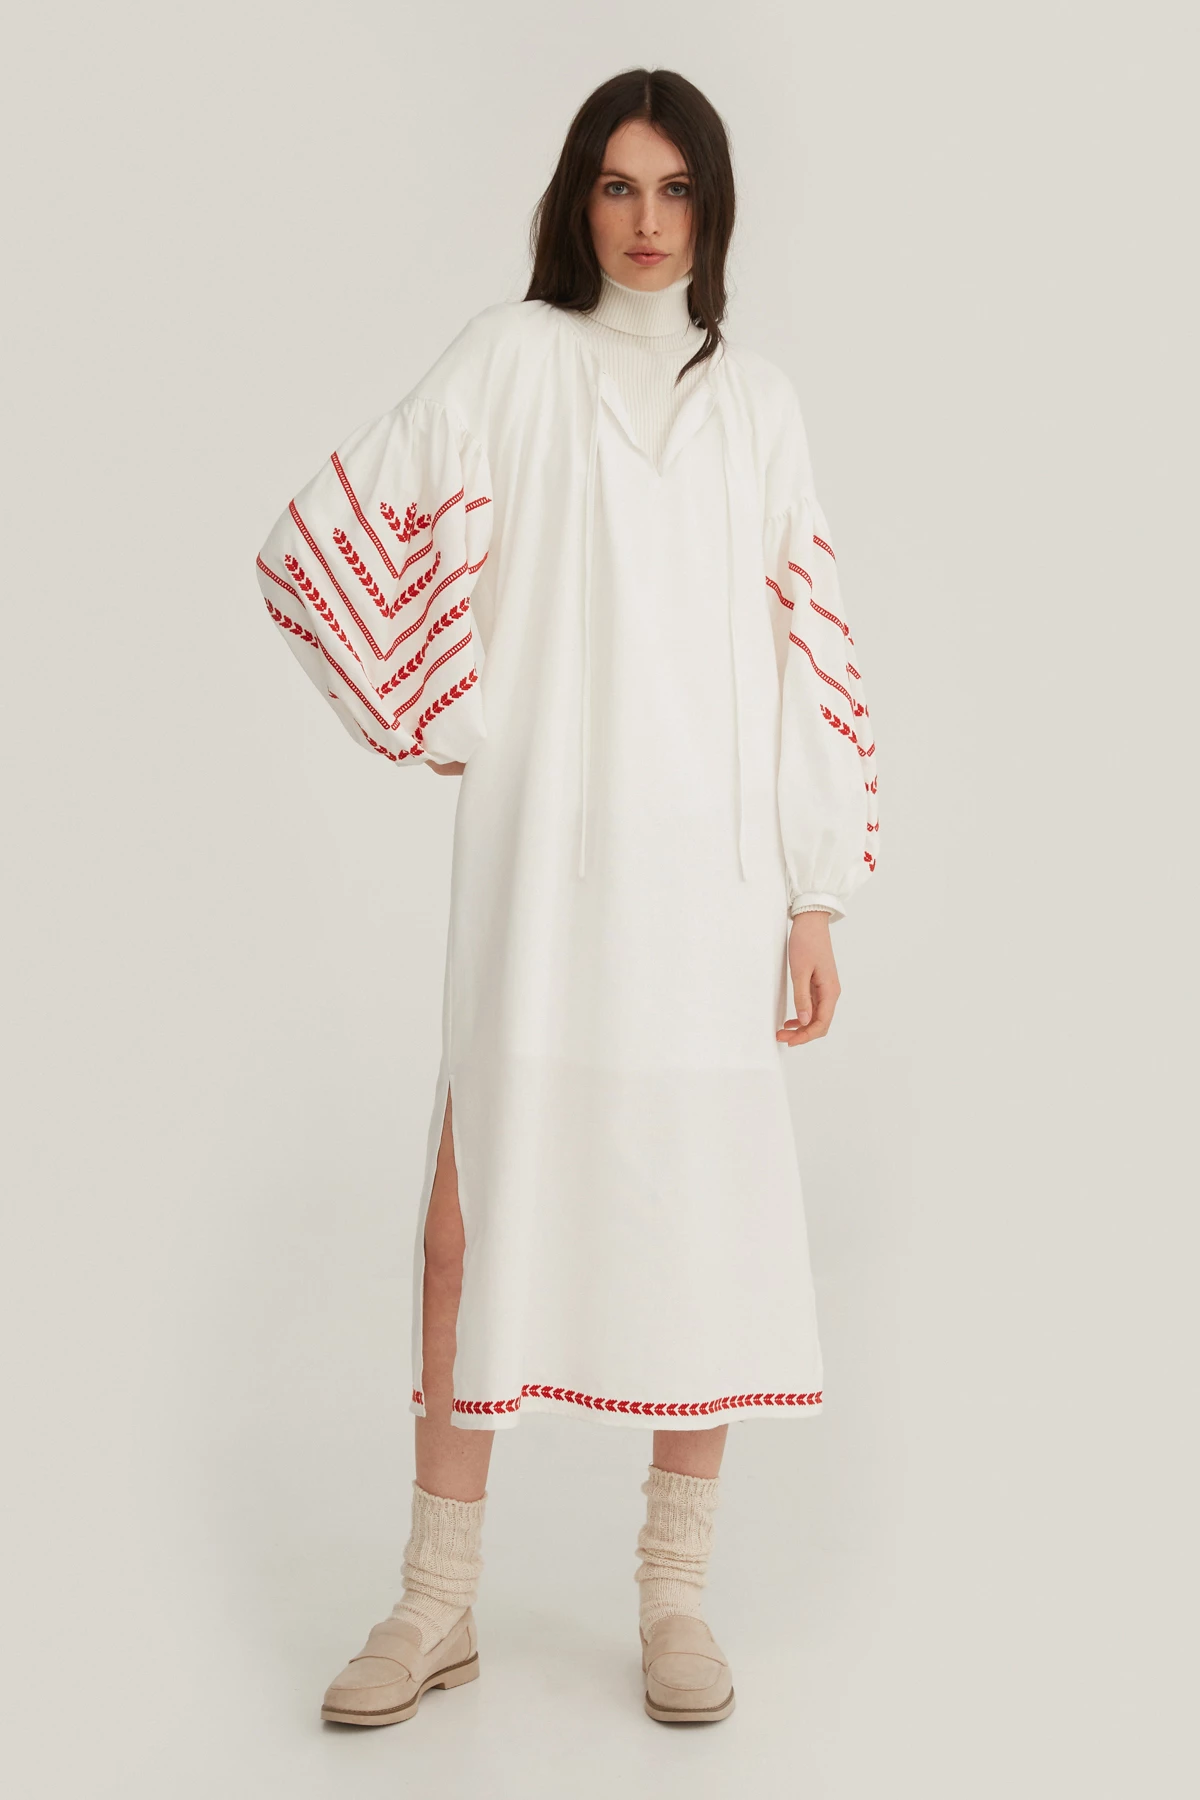 Milky linen vyshyvanka dress with wheat embroidery, photo 12